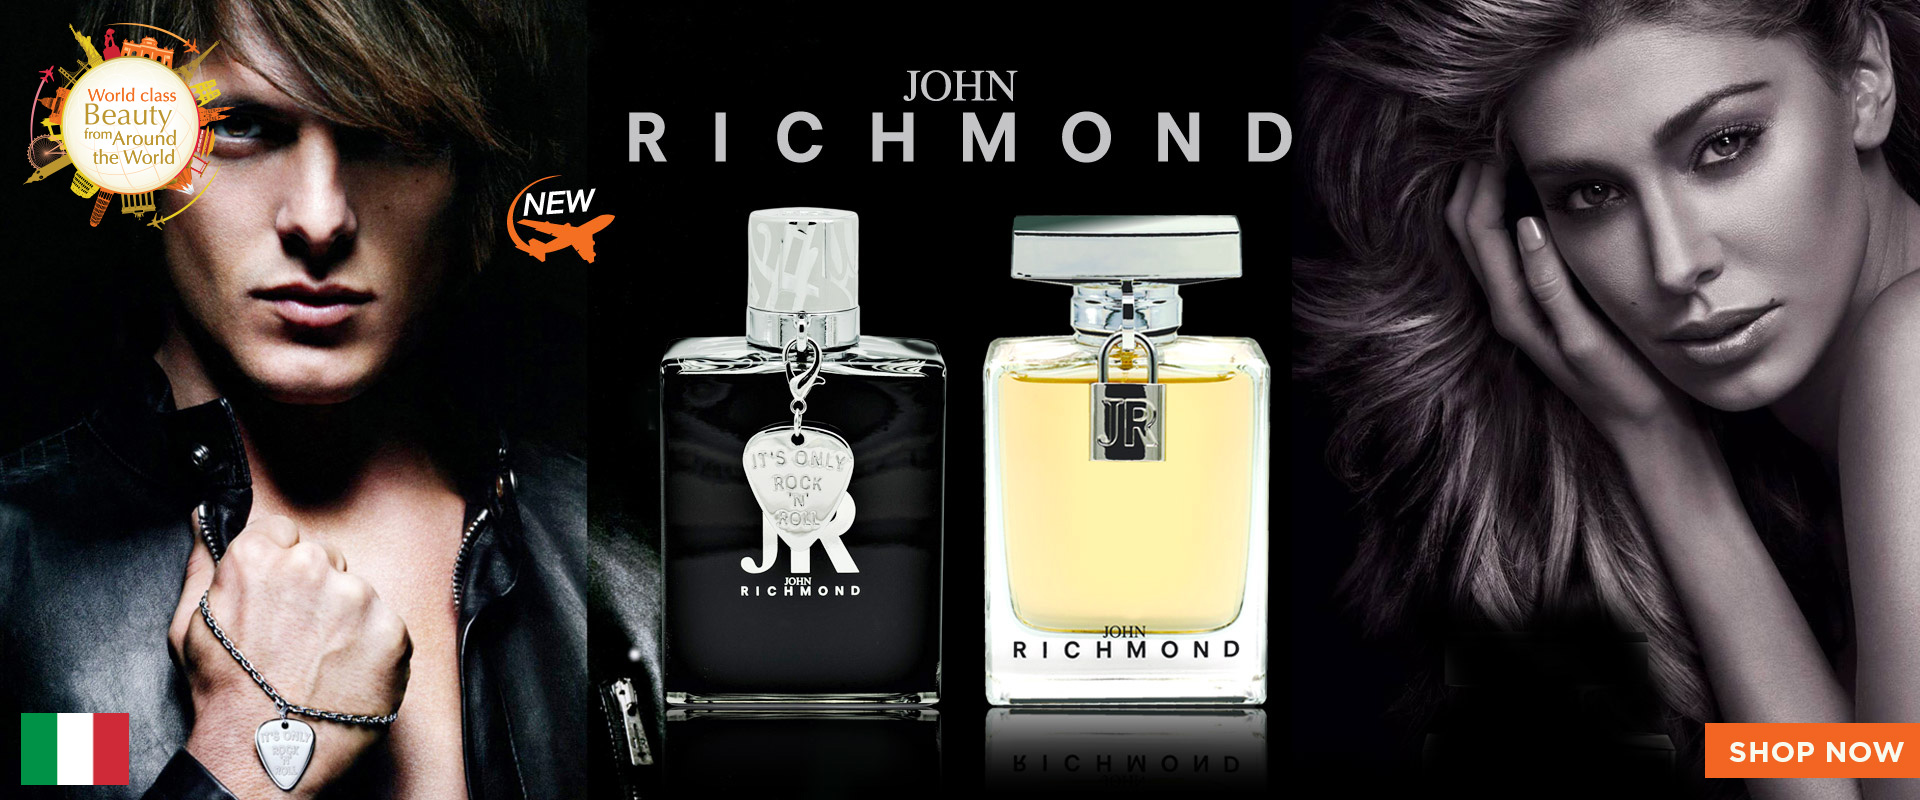 John Richmond Homepage